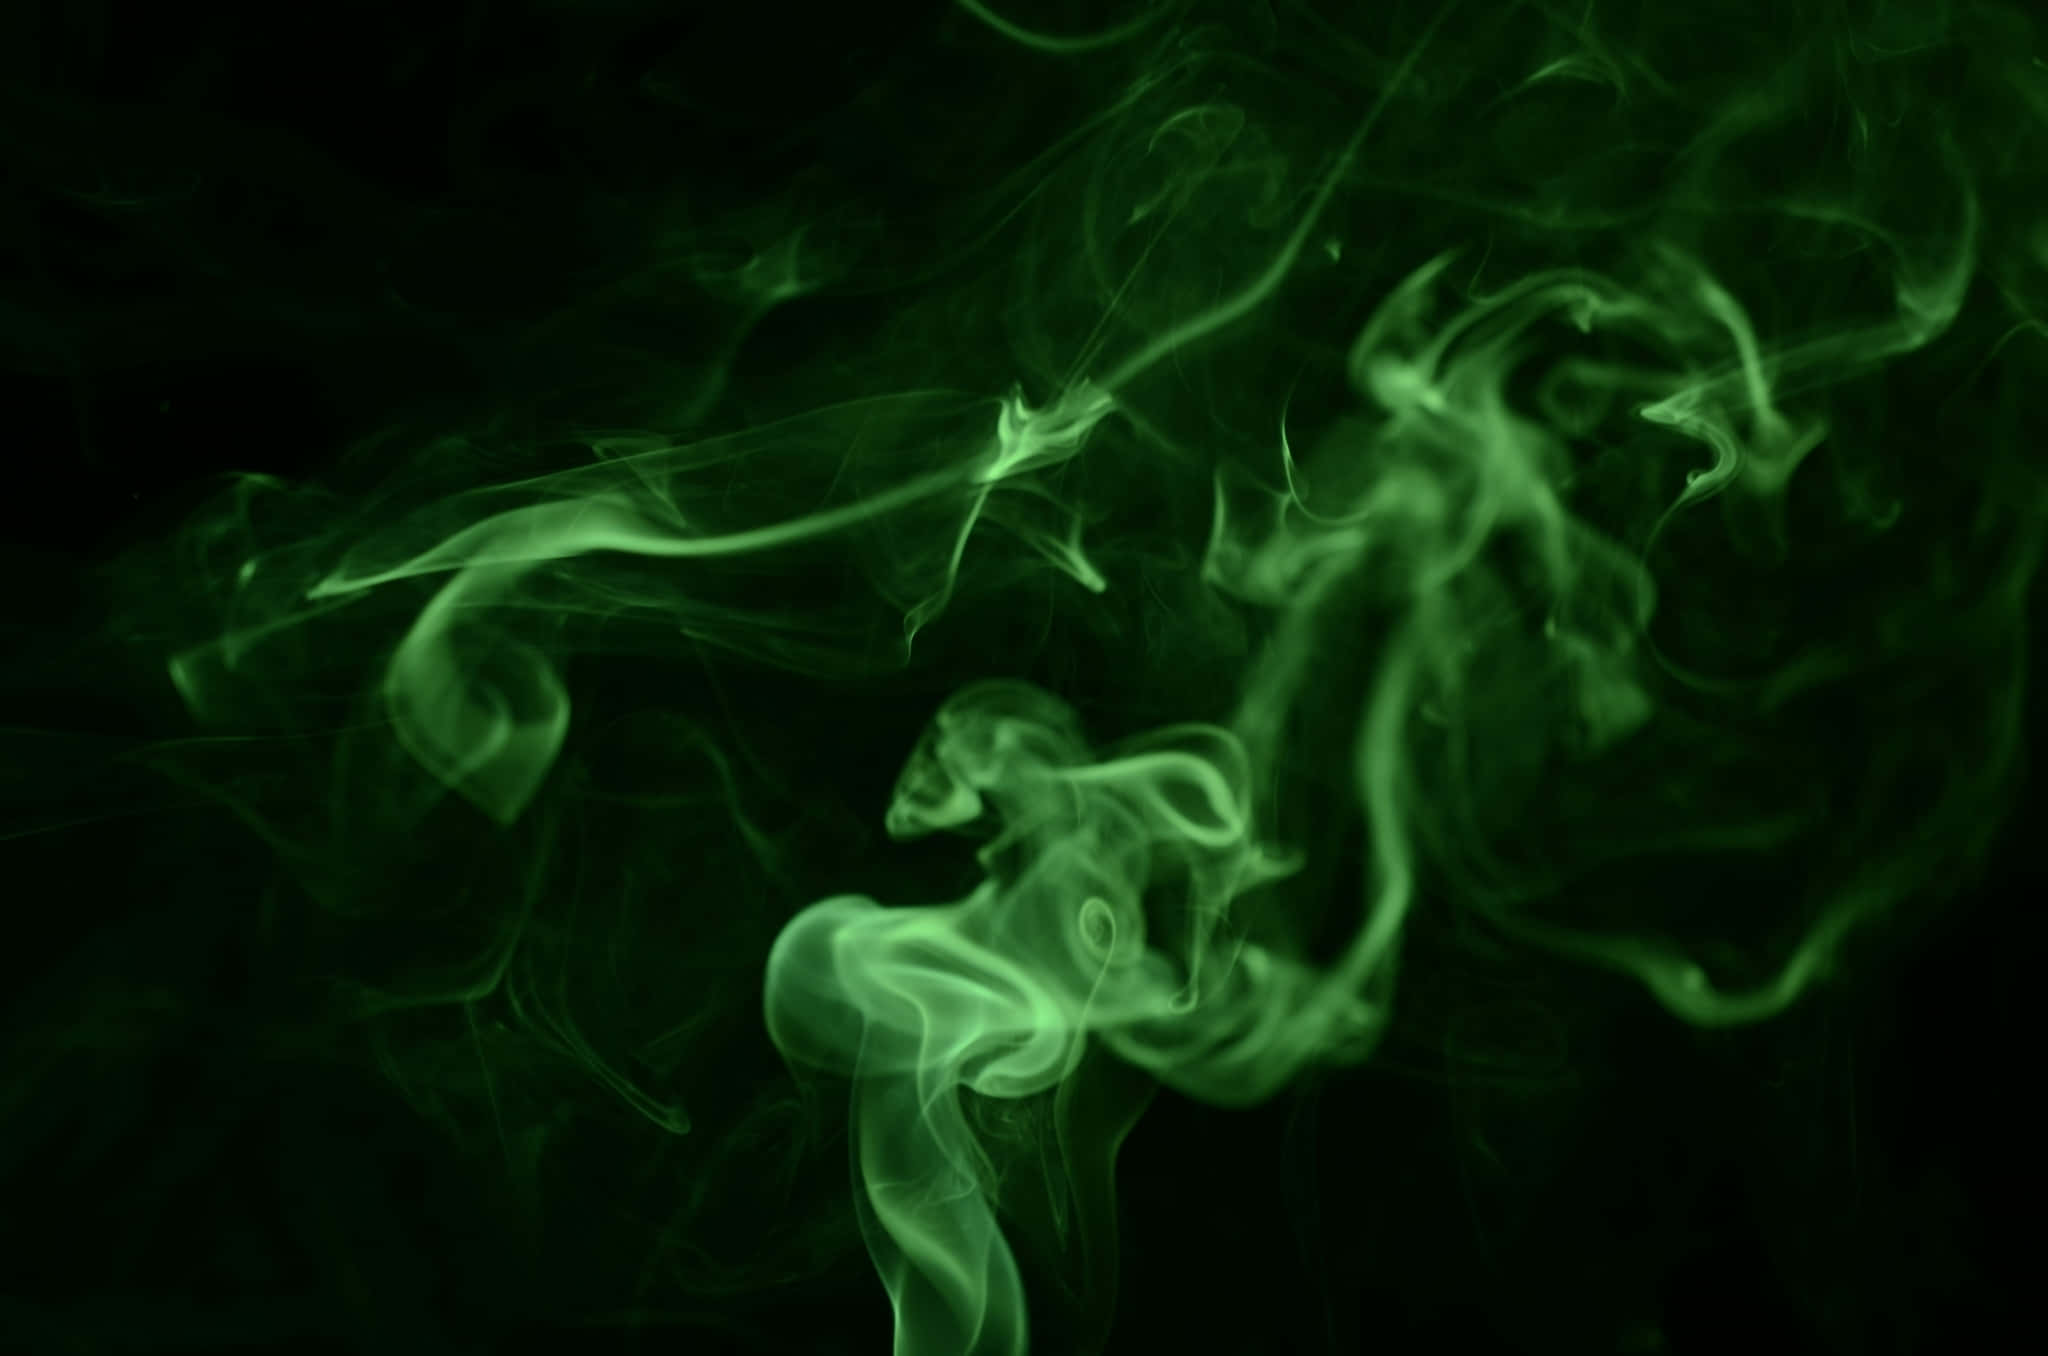 Green Smoke In Dark Aesthetic Background